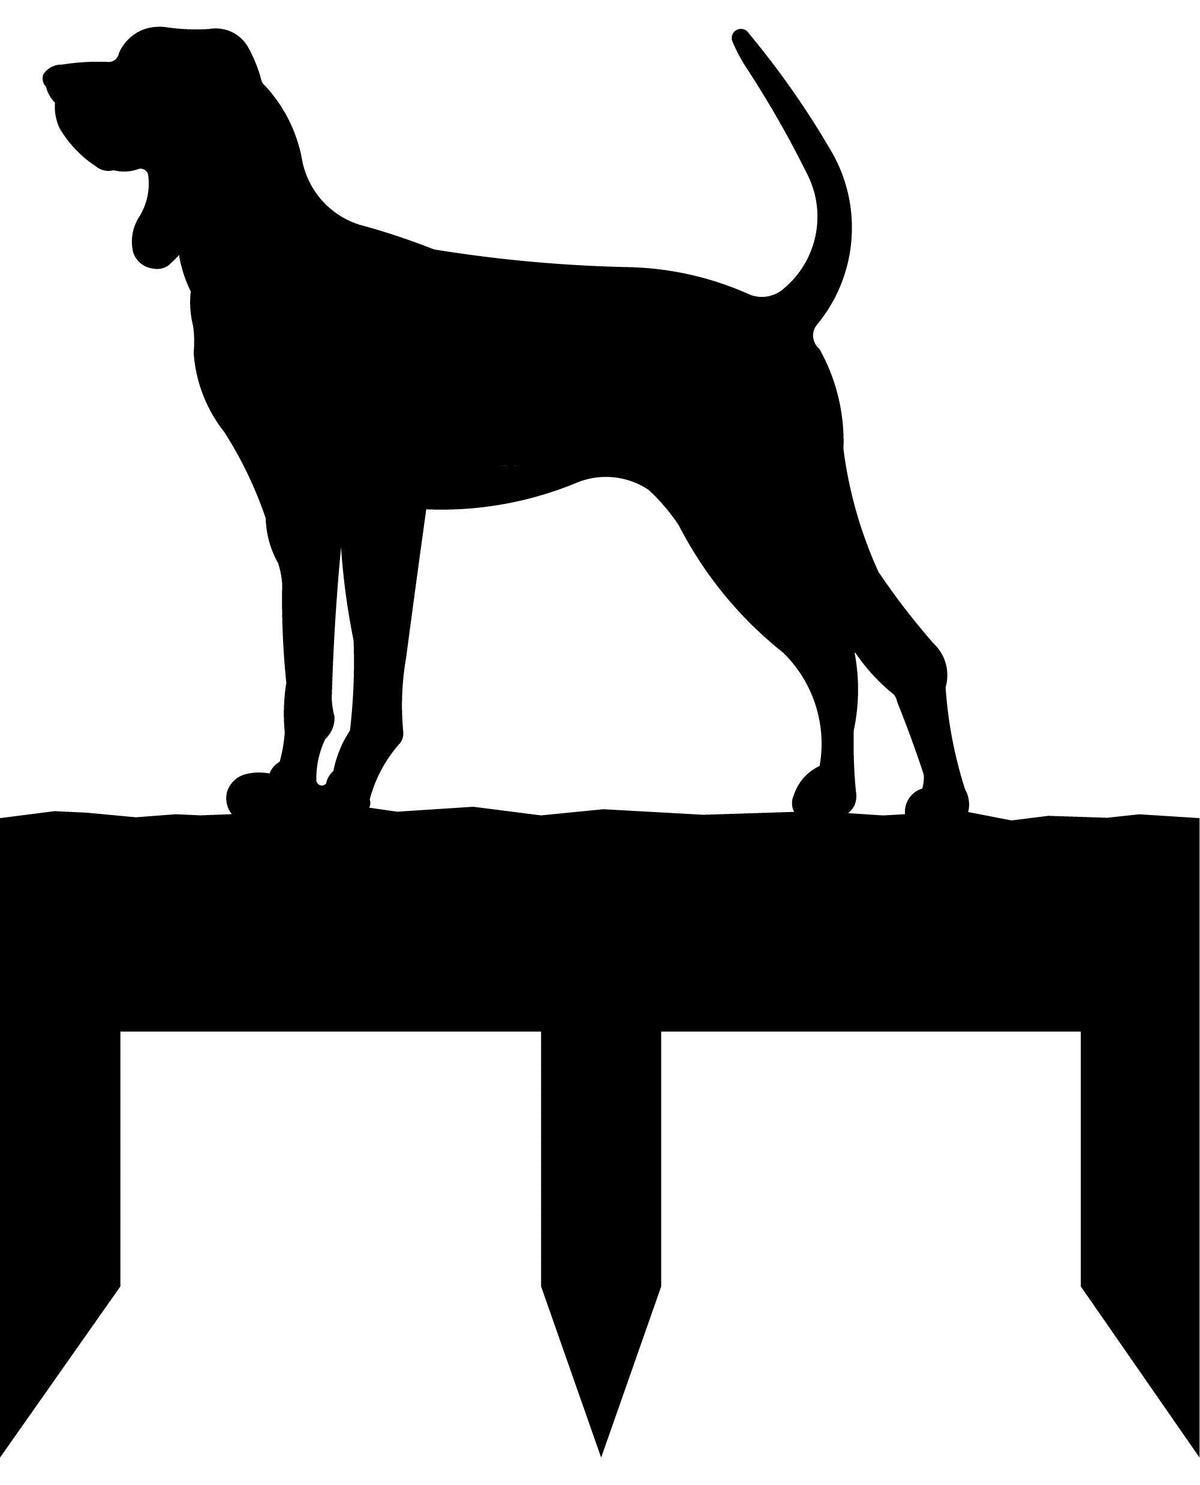 Coonhound dog address stake